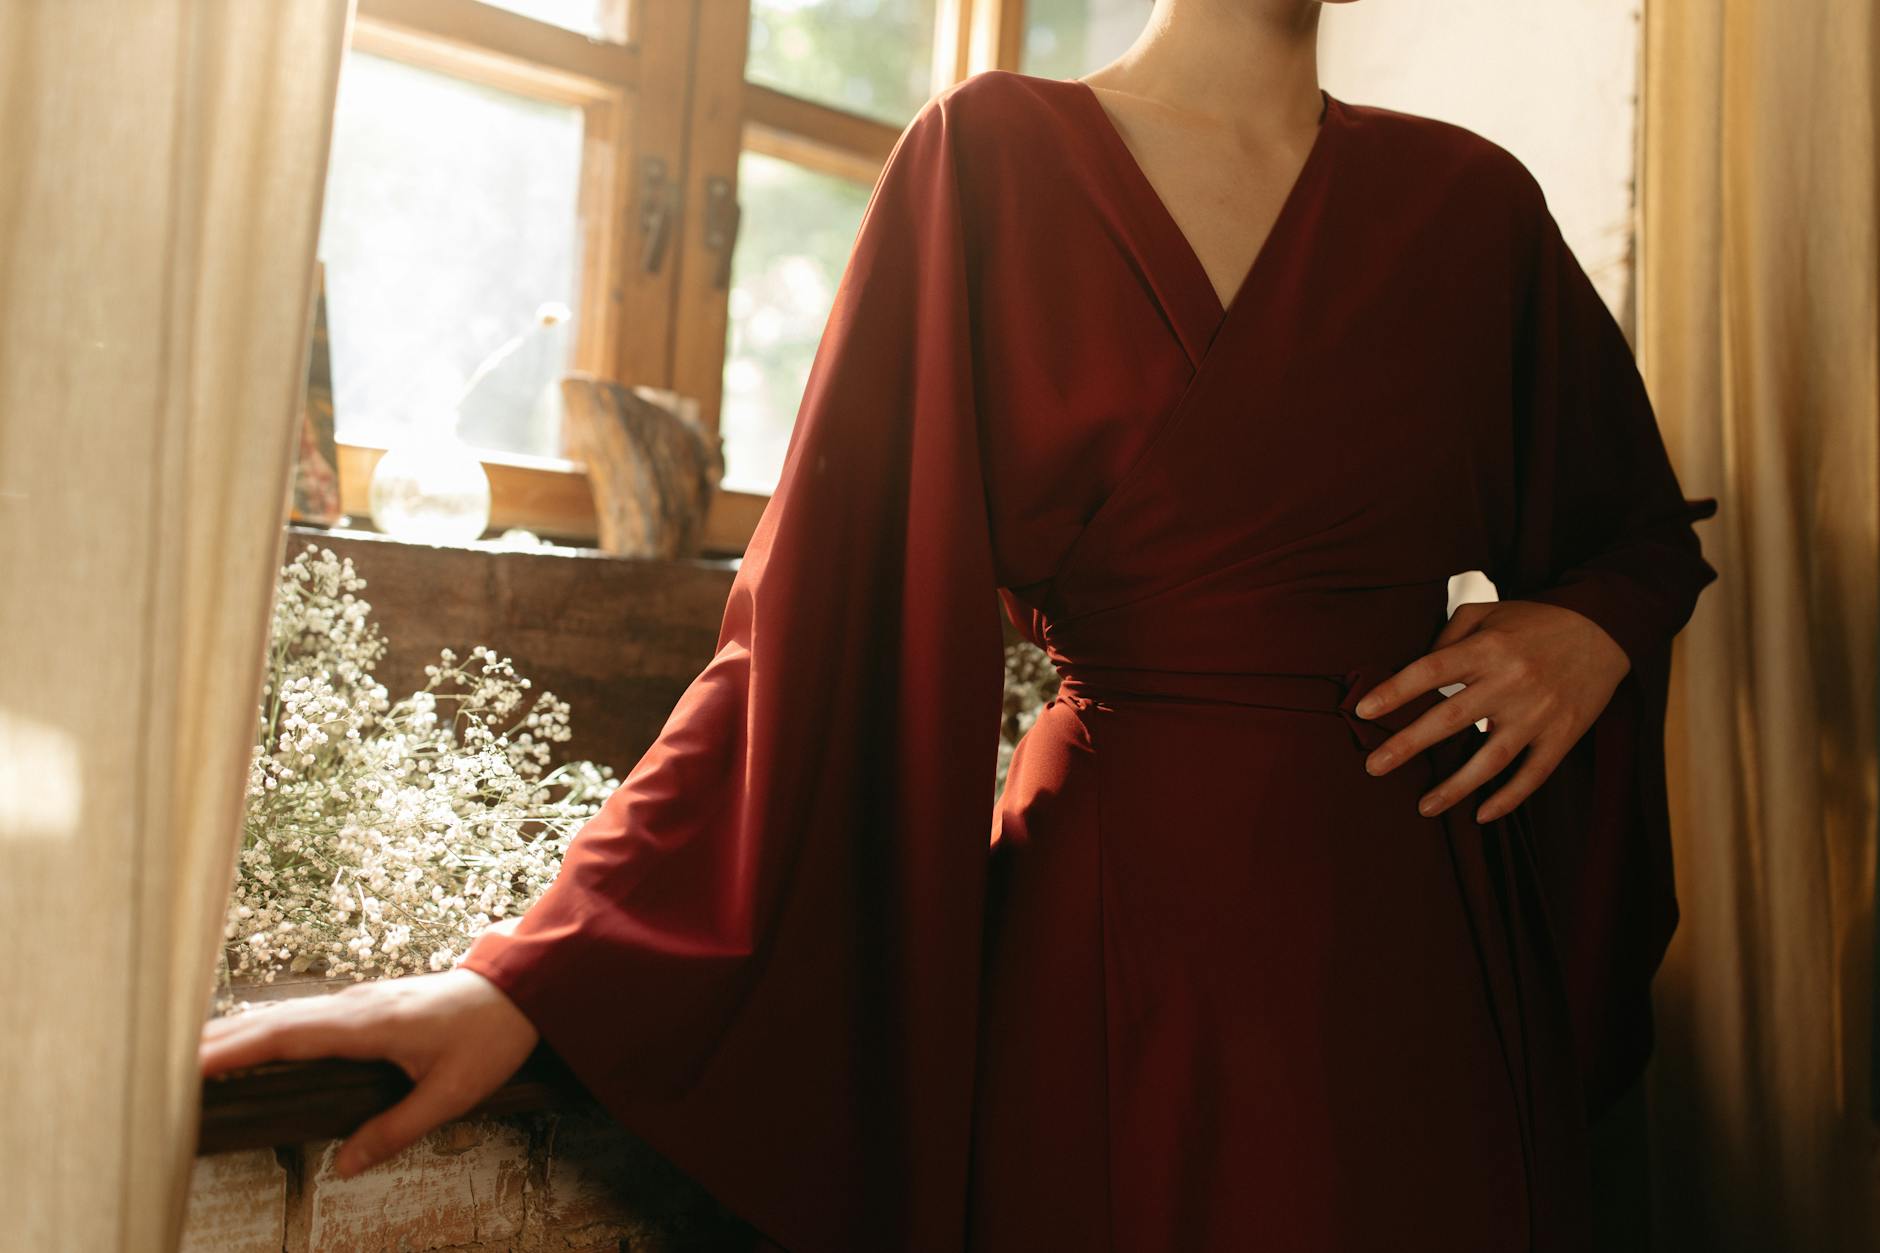 Woman in Red Robe Standing Near Window